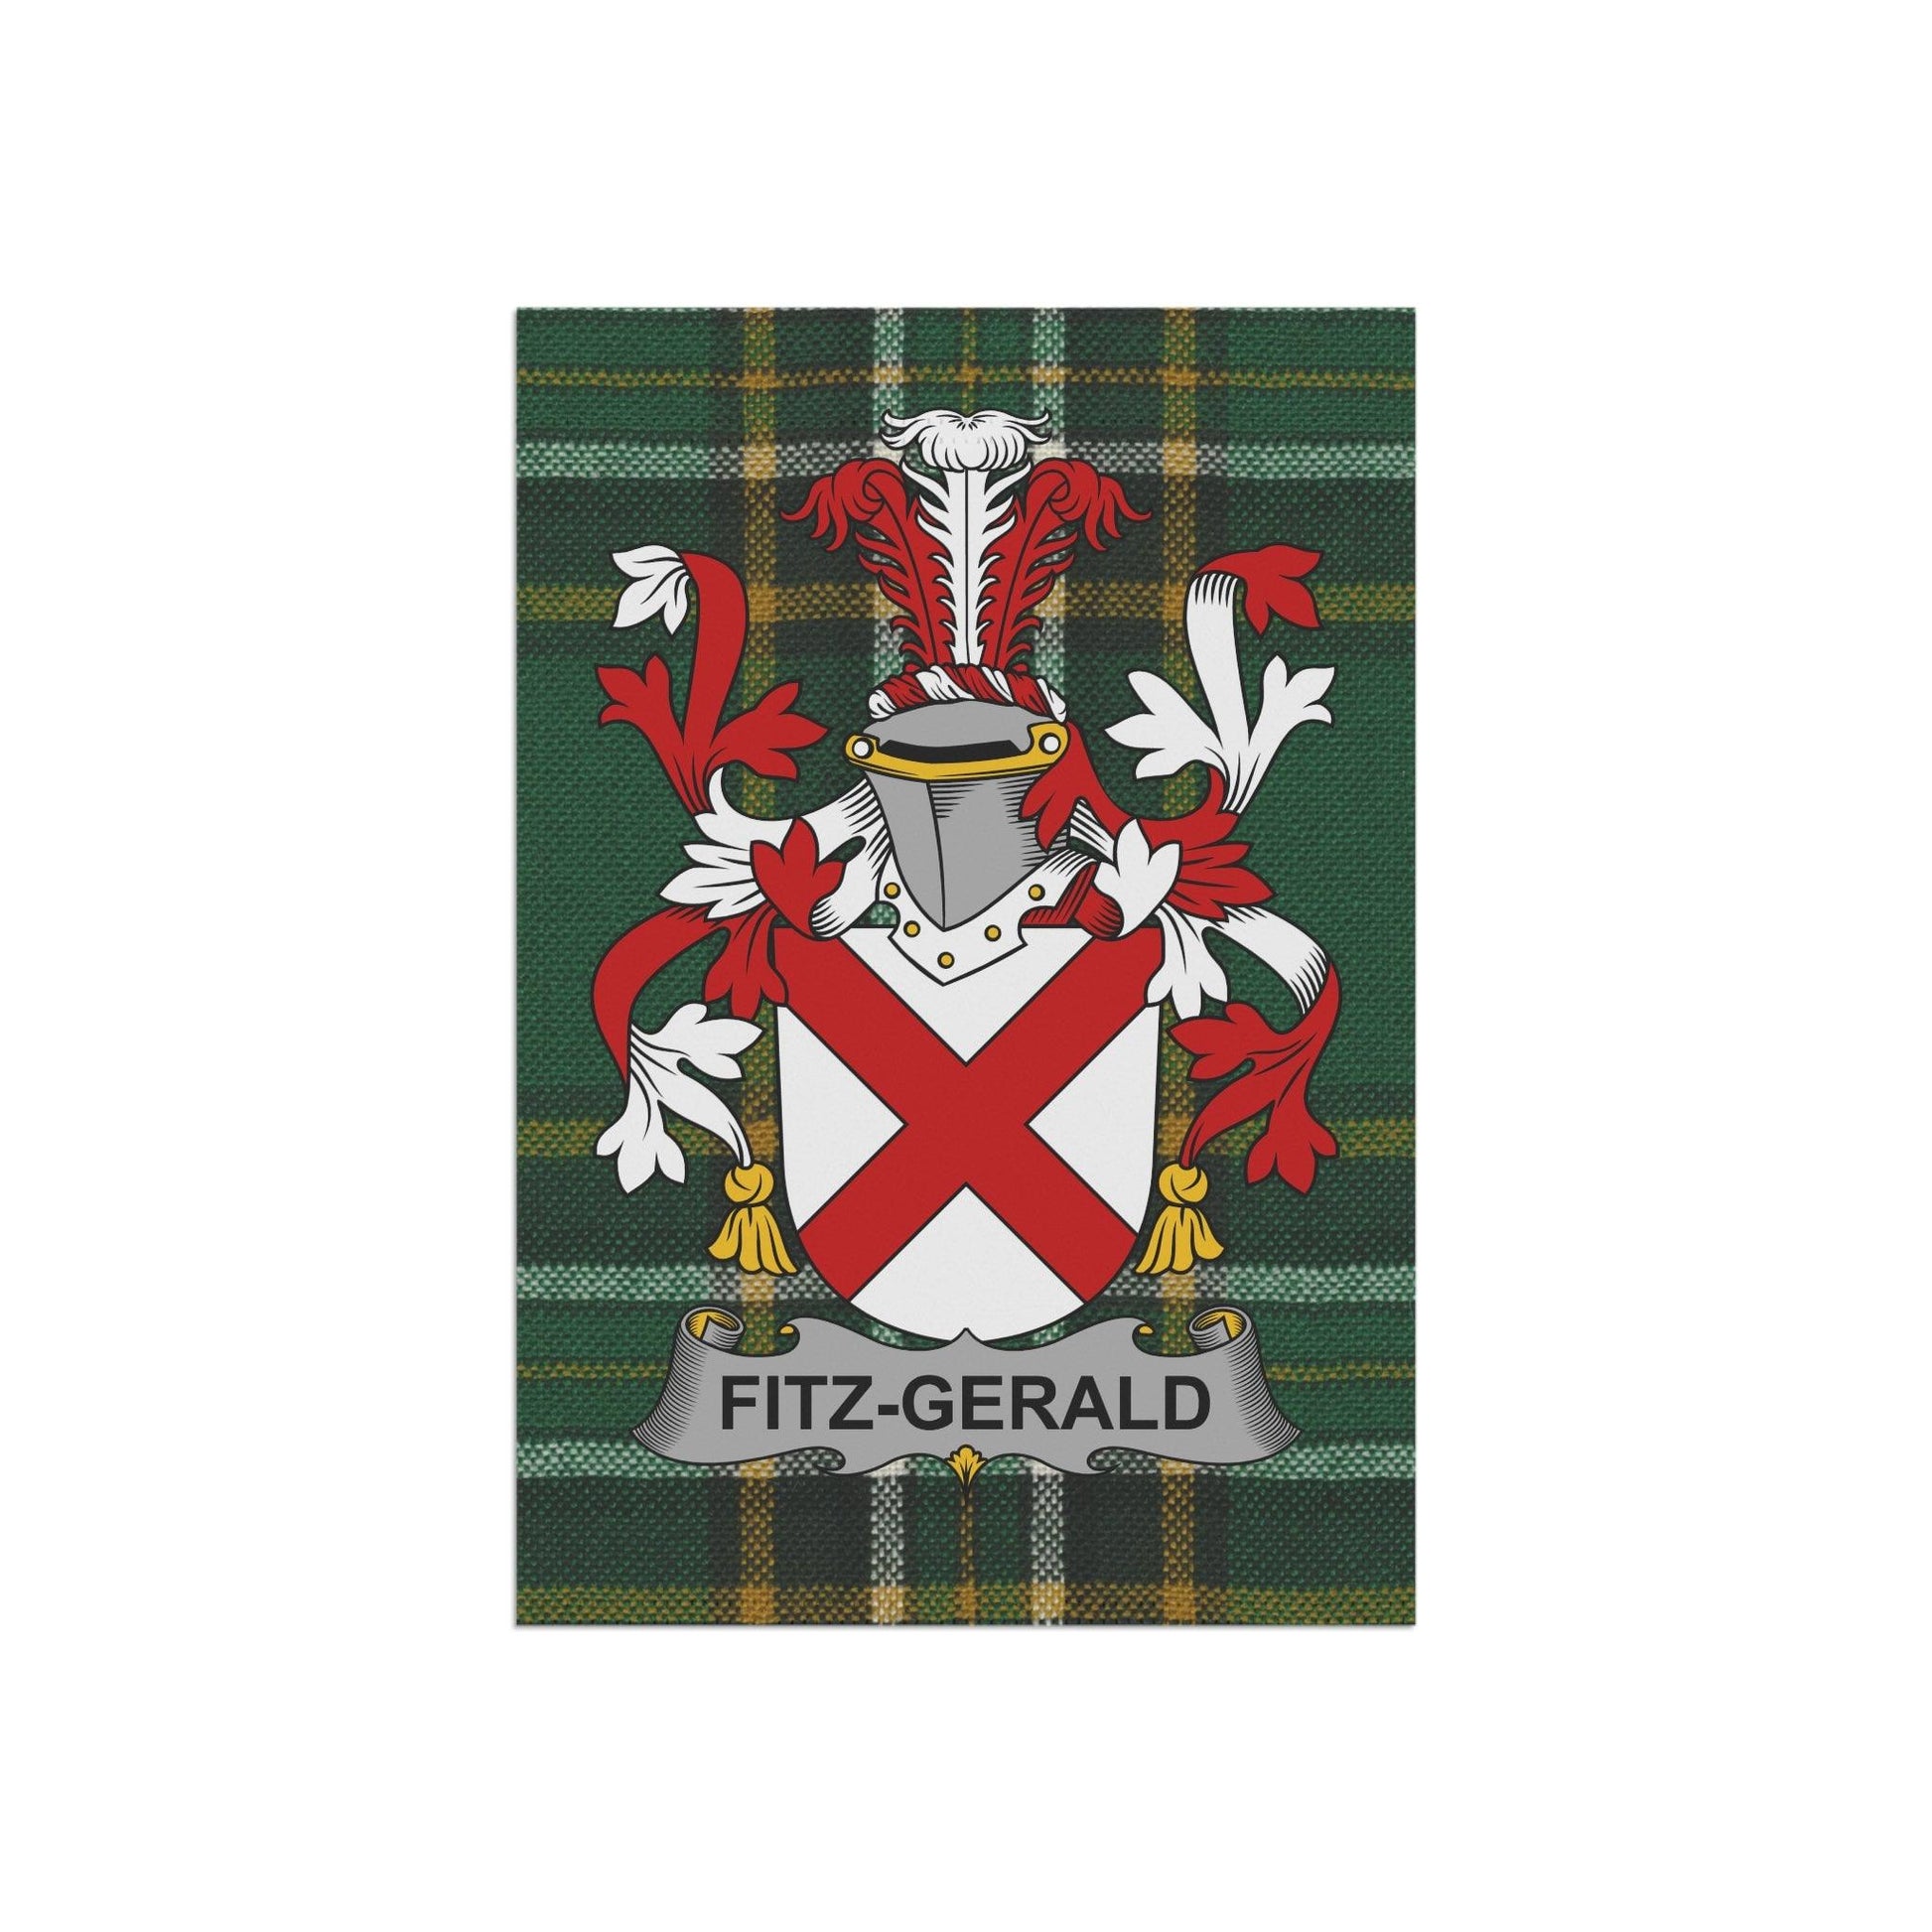 Fitz-Gerald Coat Of Arms Irish Garden Flag